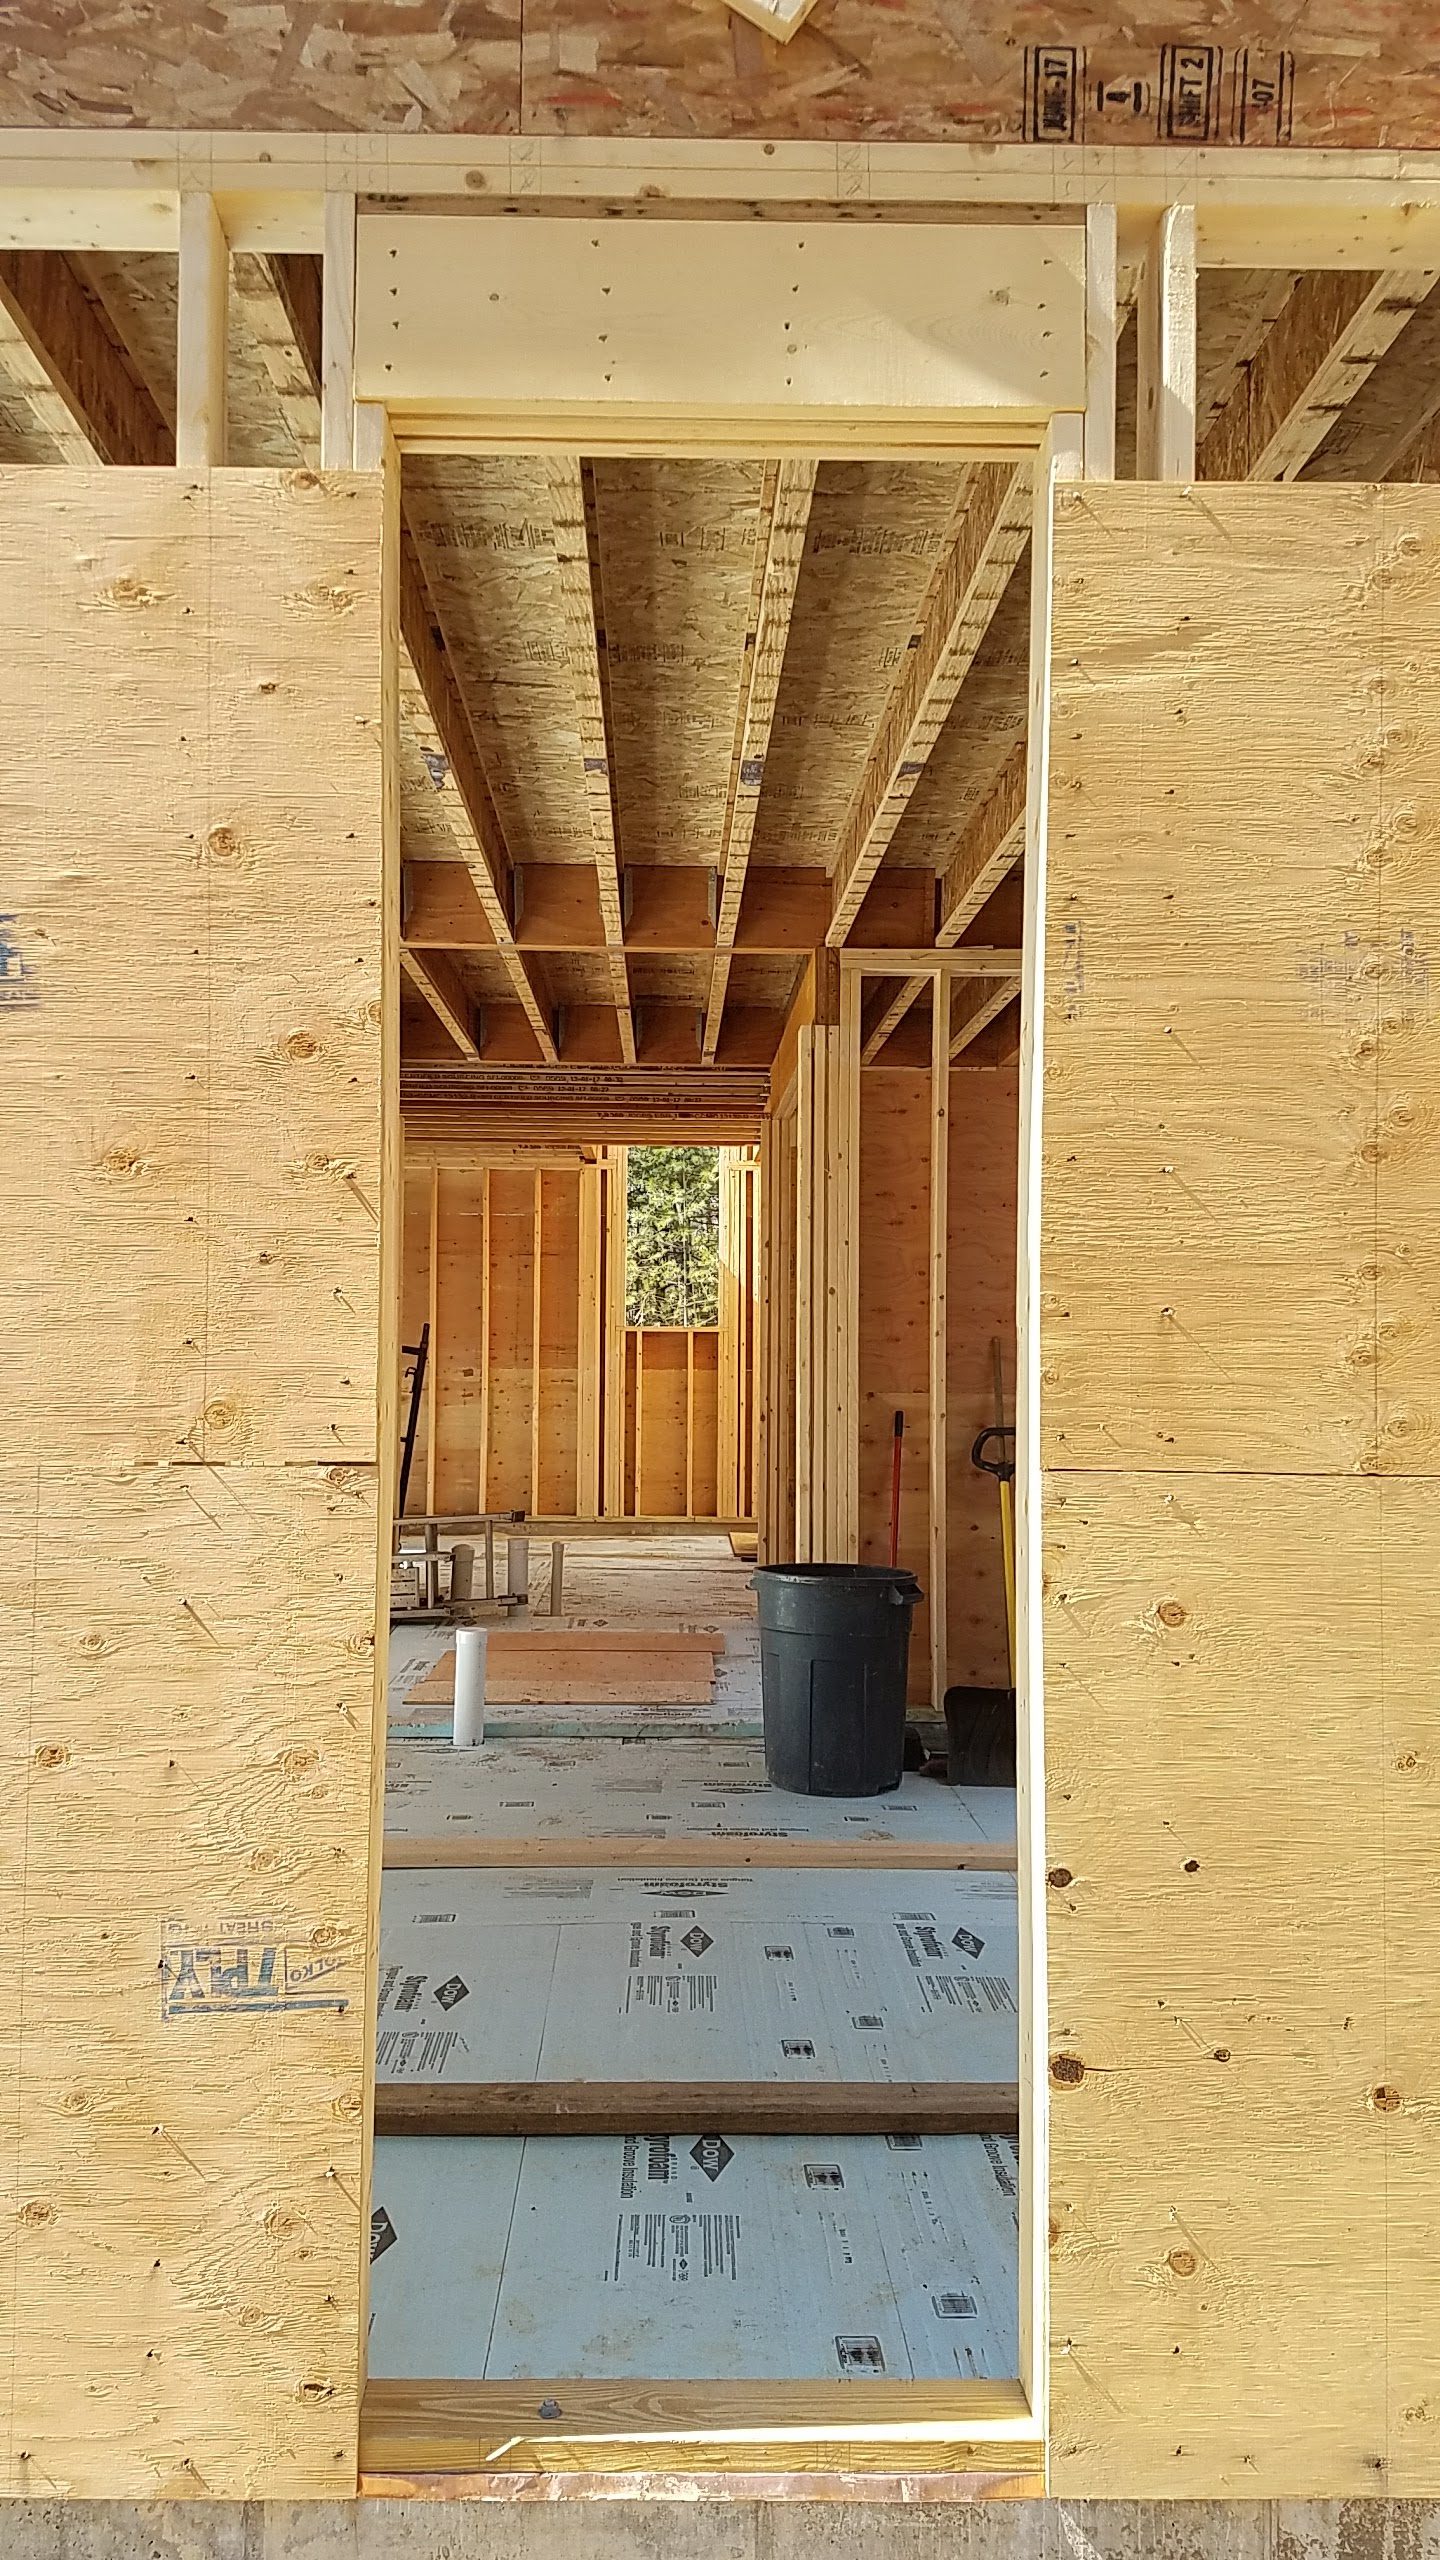 Chalet Perche - Modern Home Under Construction